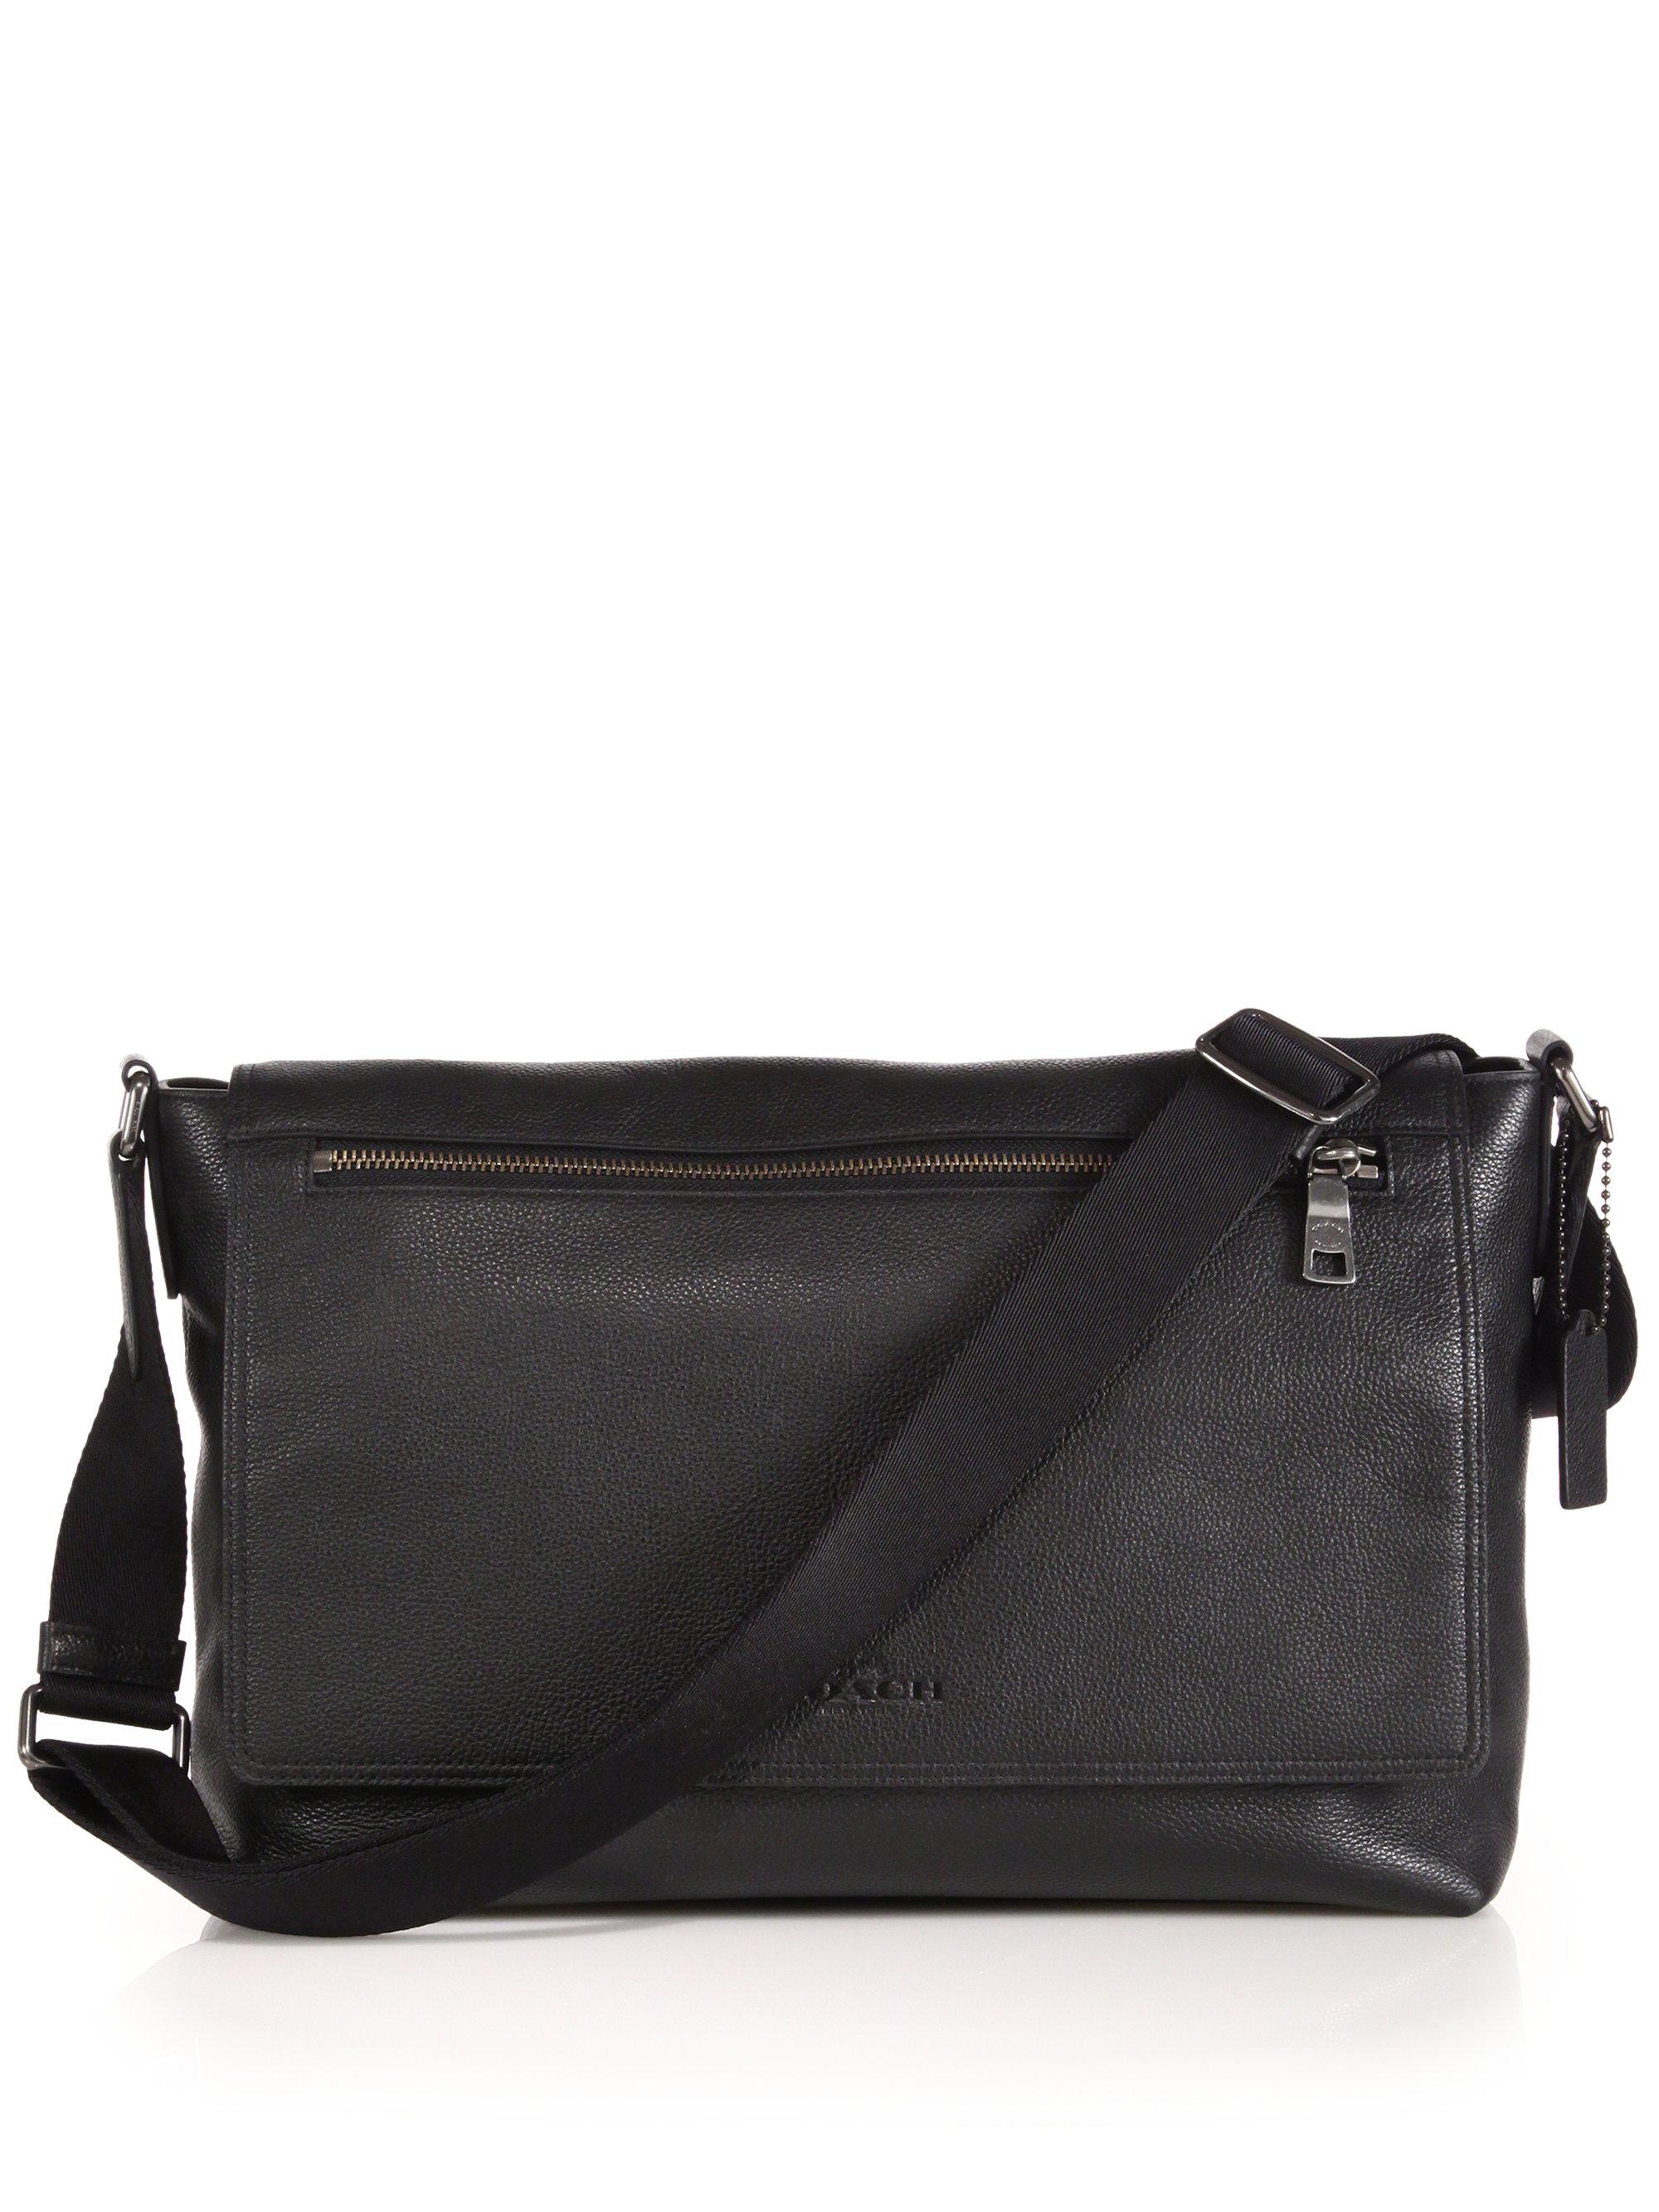 COACH Sullivan Leather Messenger Bag in Black for Men - Lyst